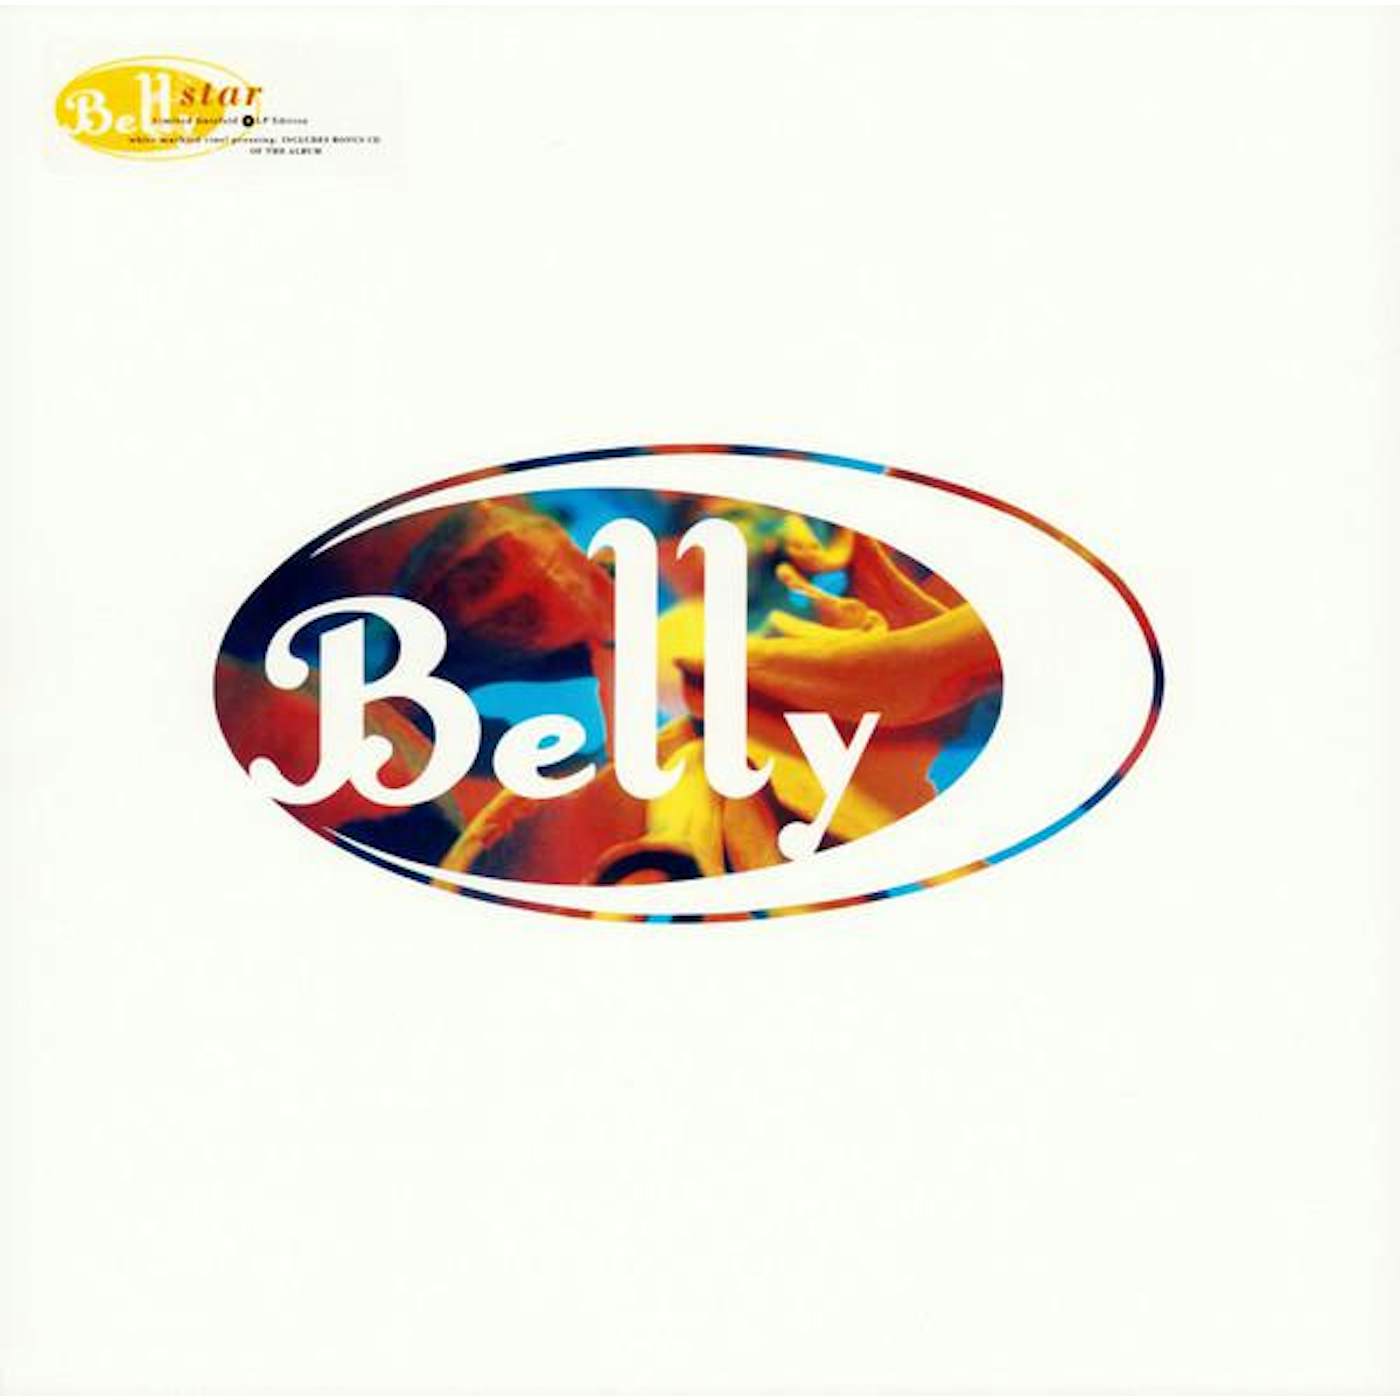 Belly Star (2LP/CD) (White Marbled Vinyl/Gatefold/Limited) Vinyl Record